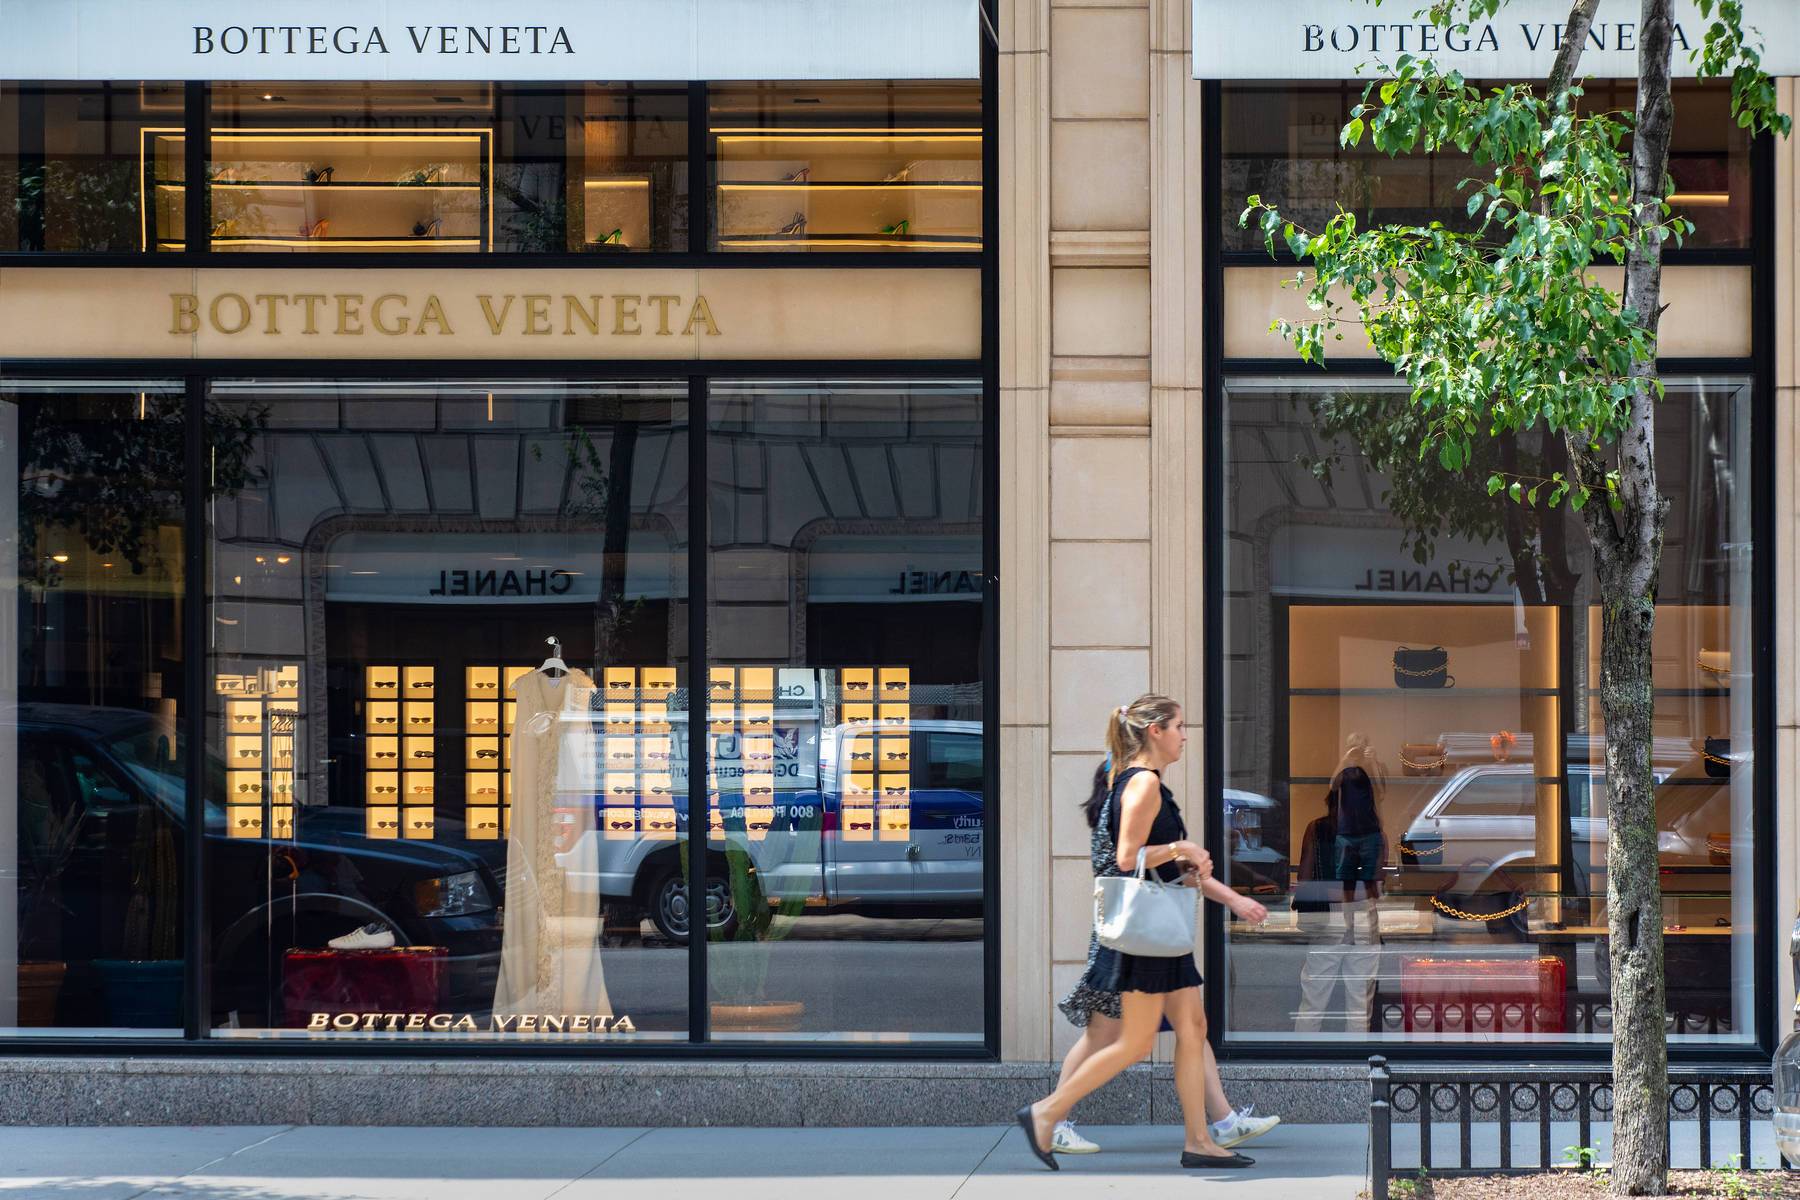 Bottega Beneta storefront with people walking by